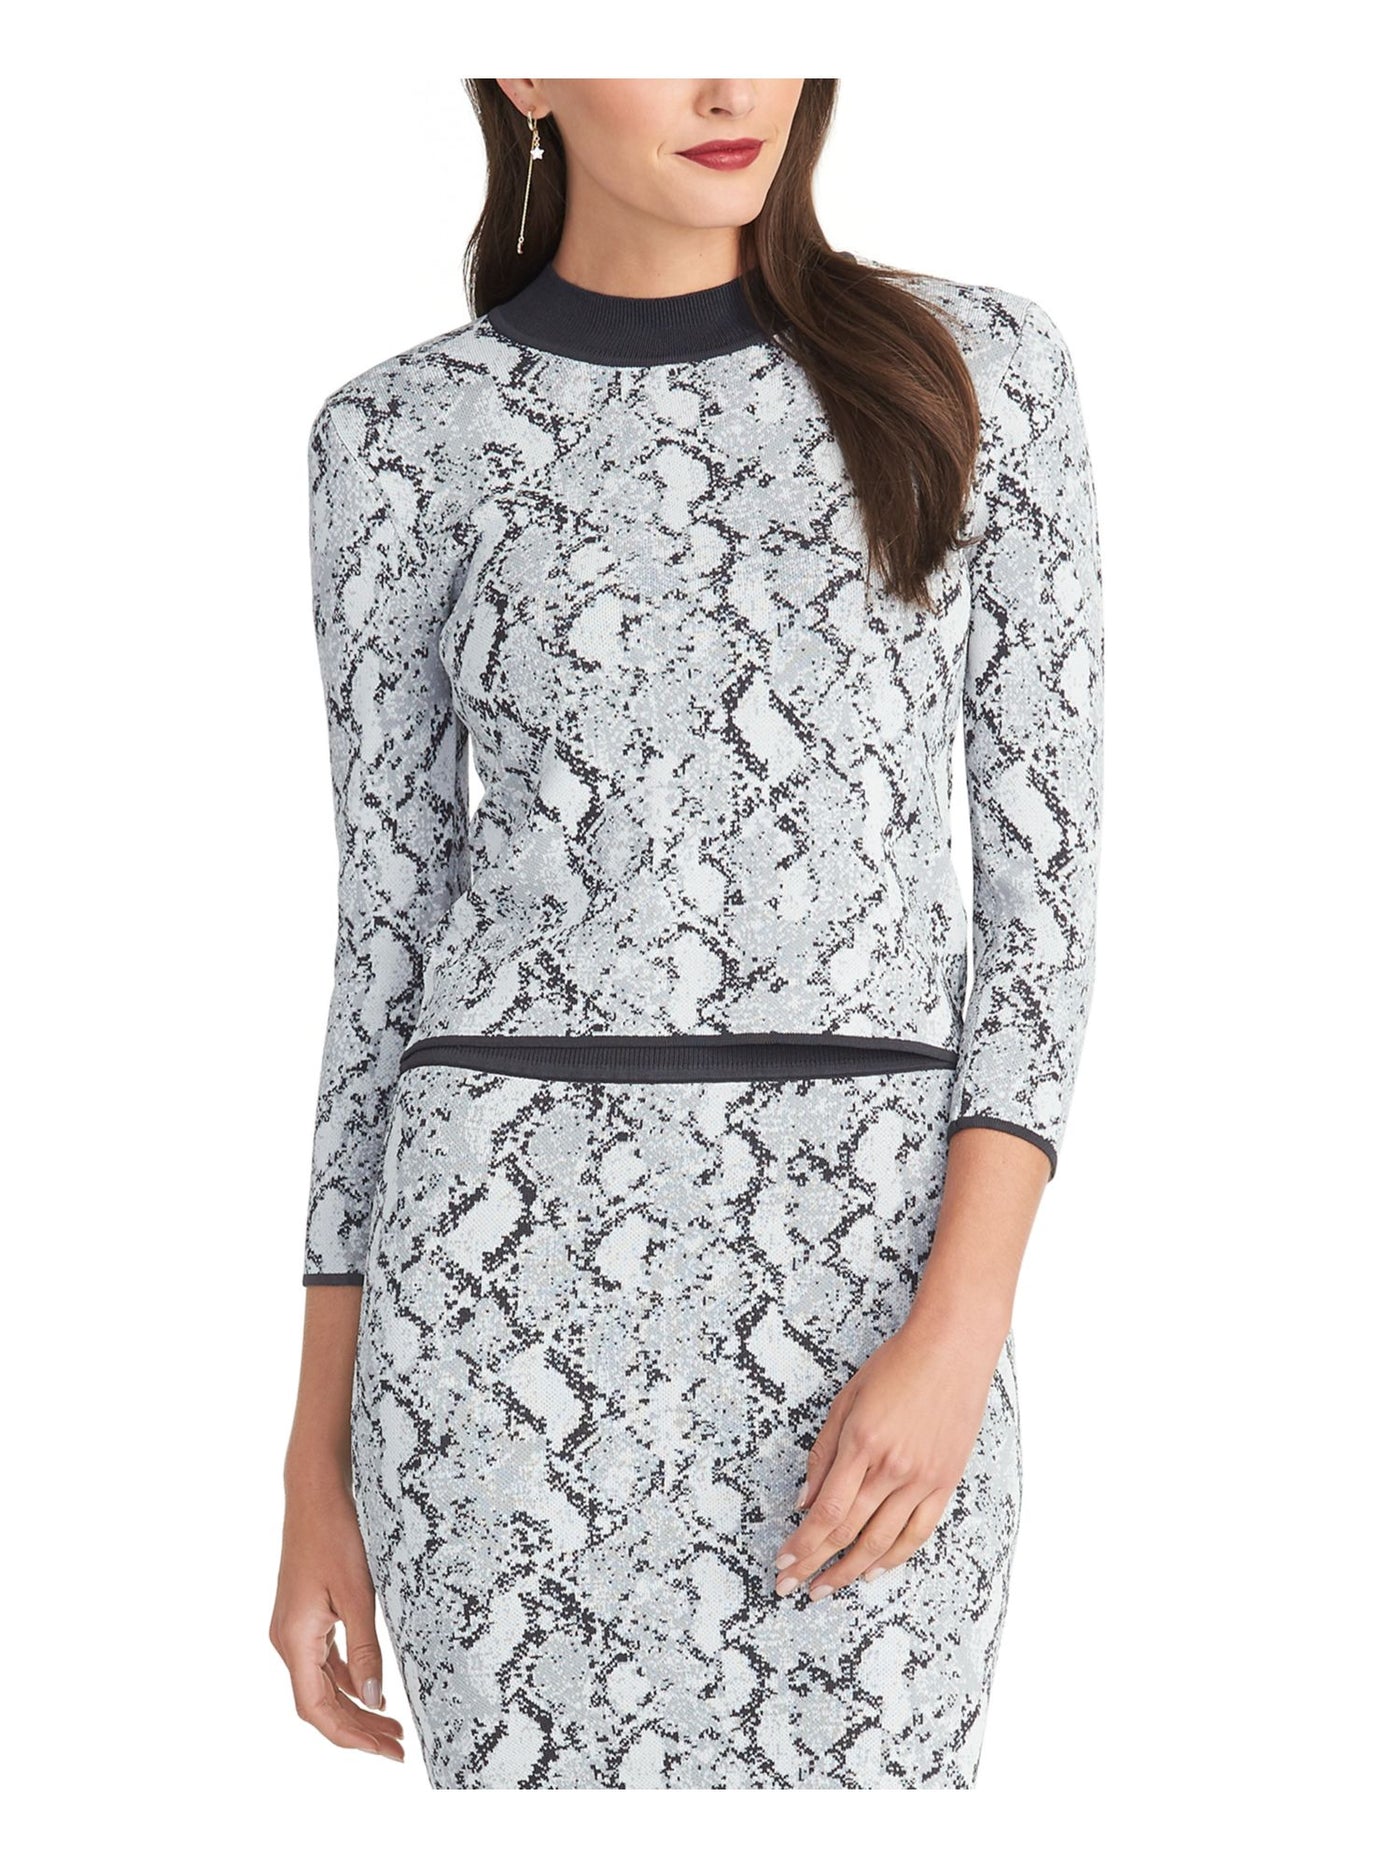 RACHEL ROY Womens Gray Open Back Printed Long Sleeve Jewel Neck Top Size: L